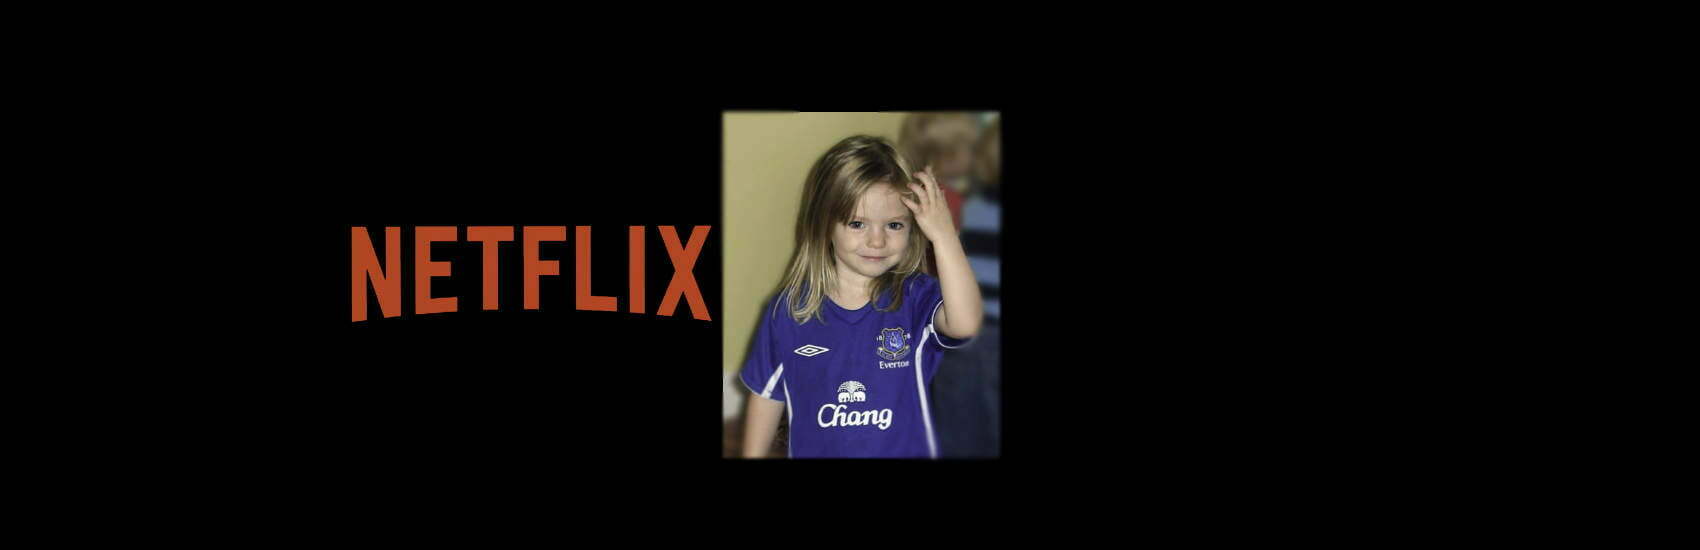 The Madeleine McCann Netflix documentary trailer has been released